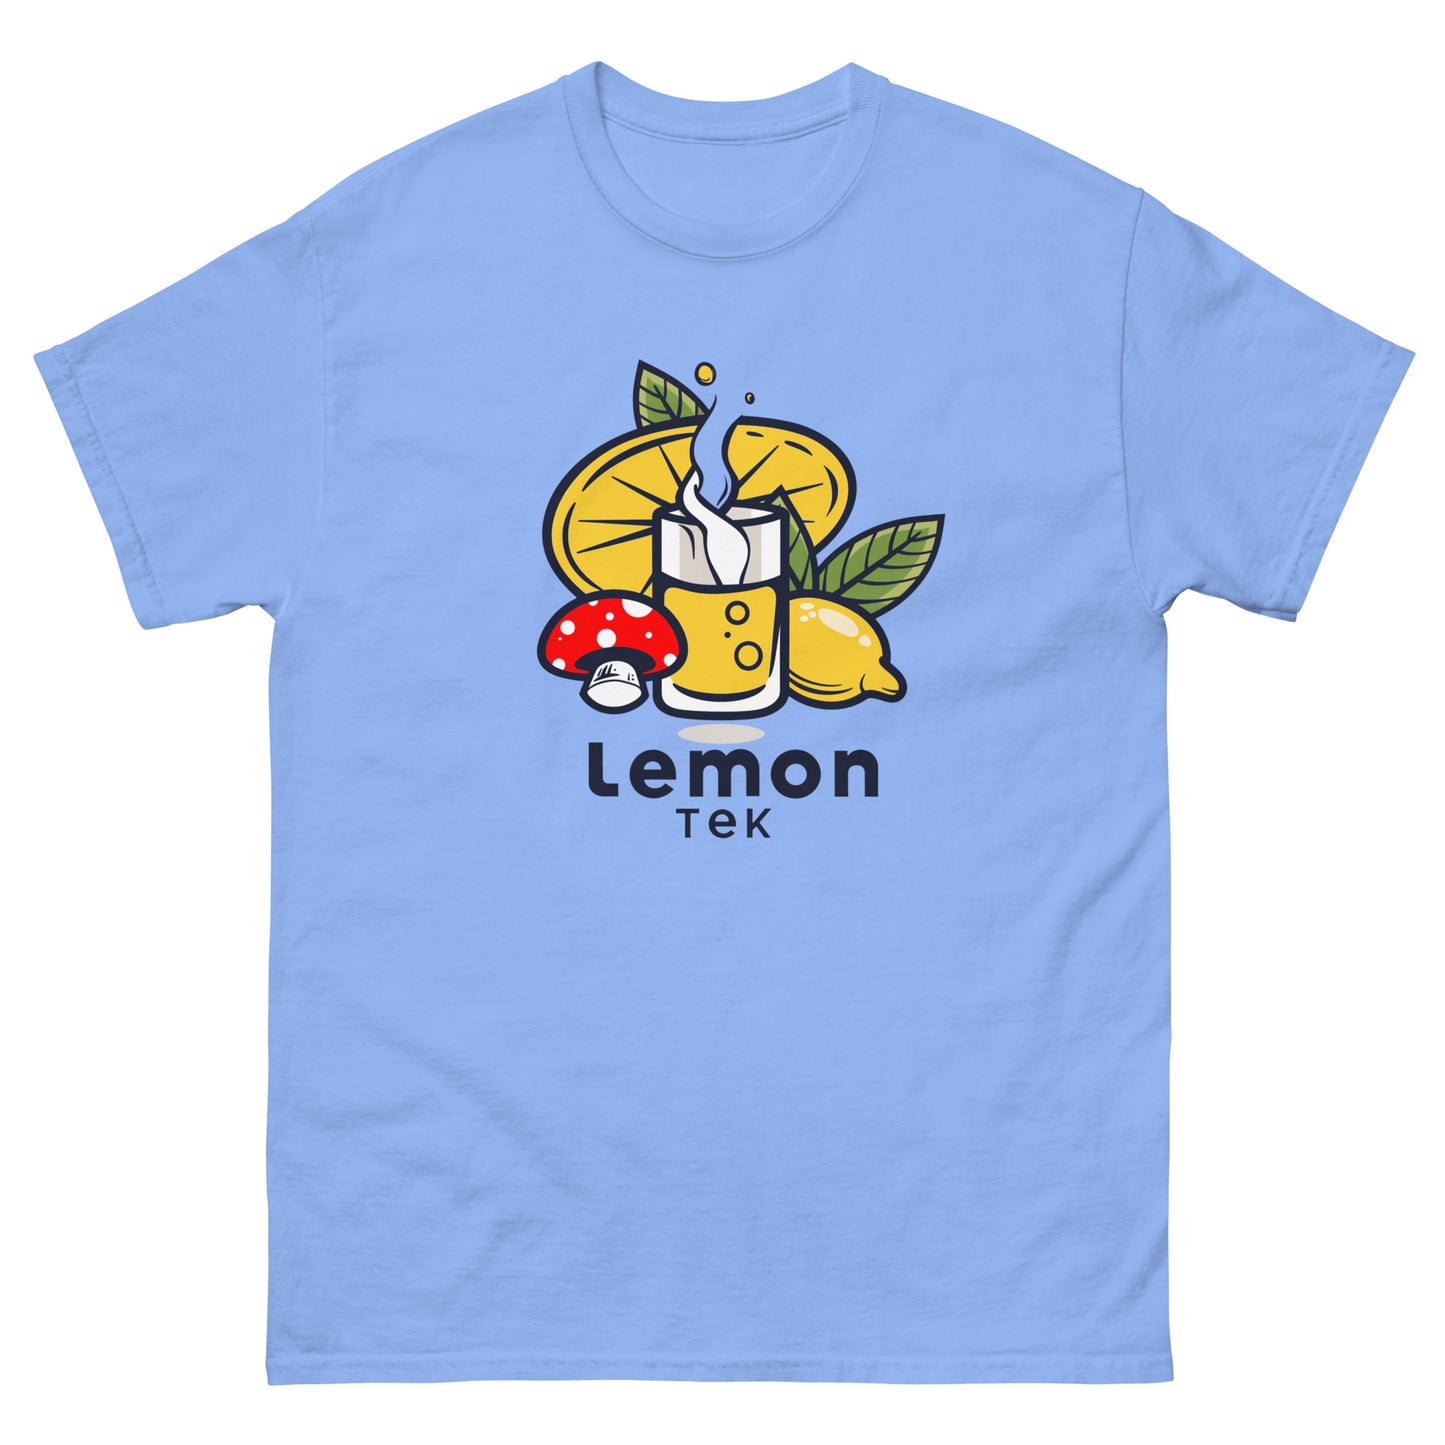 Lemon Tek Tee